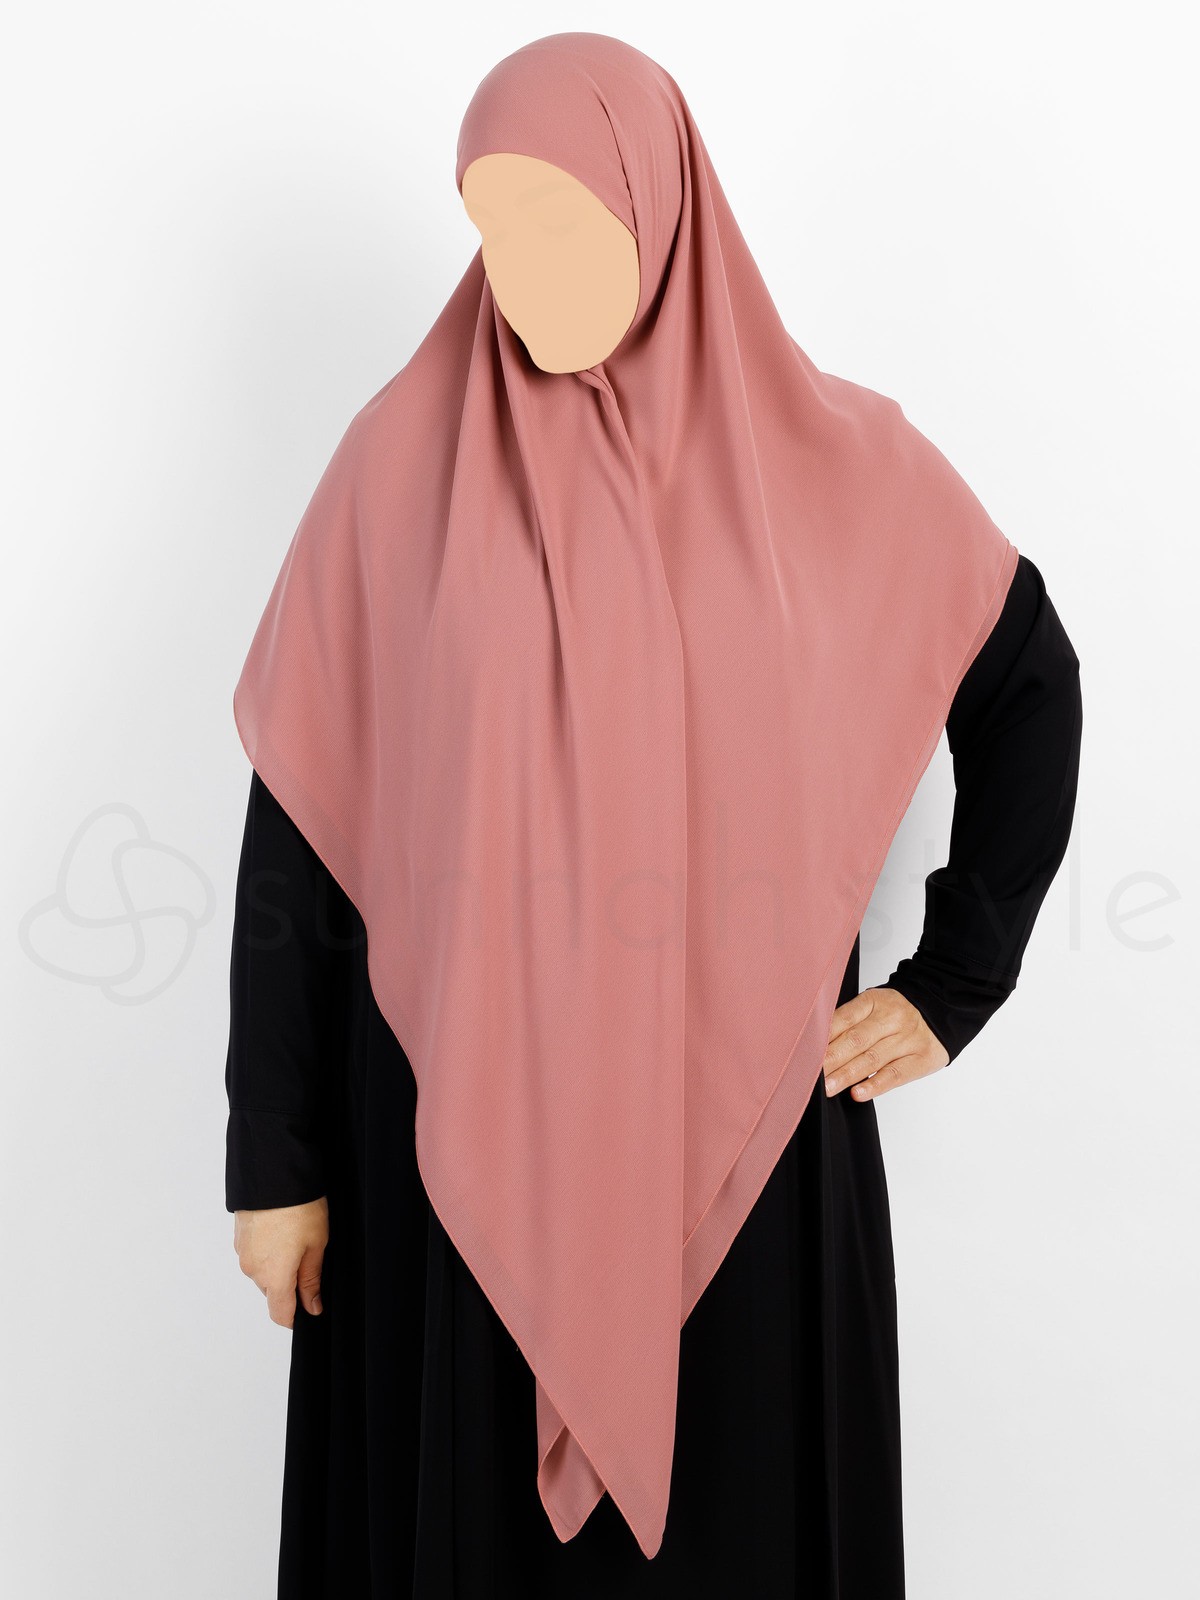 Sunnah Style - Essentials Square Hijab (Premium Chiffon) - Large (Coral)